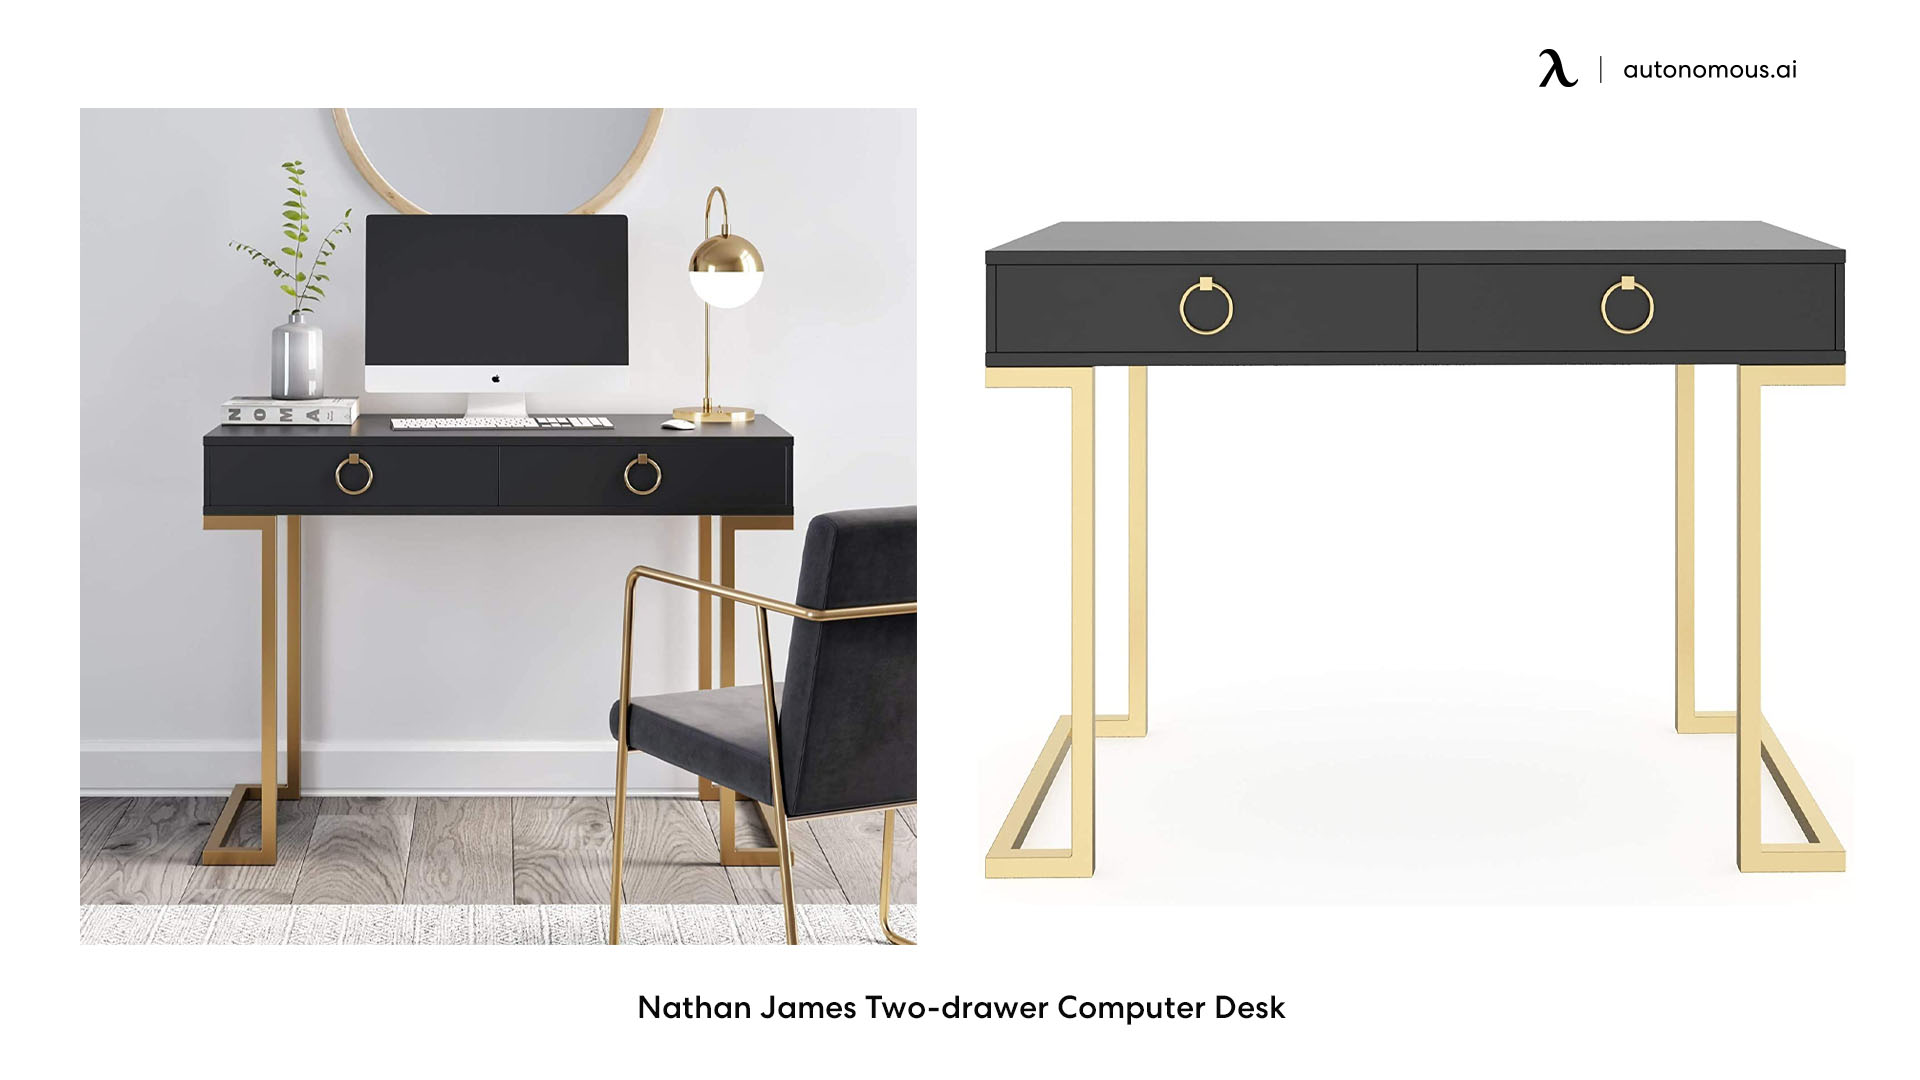 Nathan James Two-drawer Computer Desk